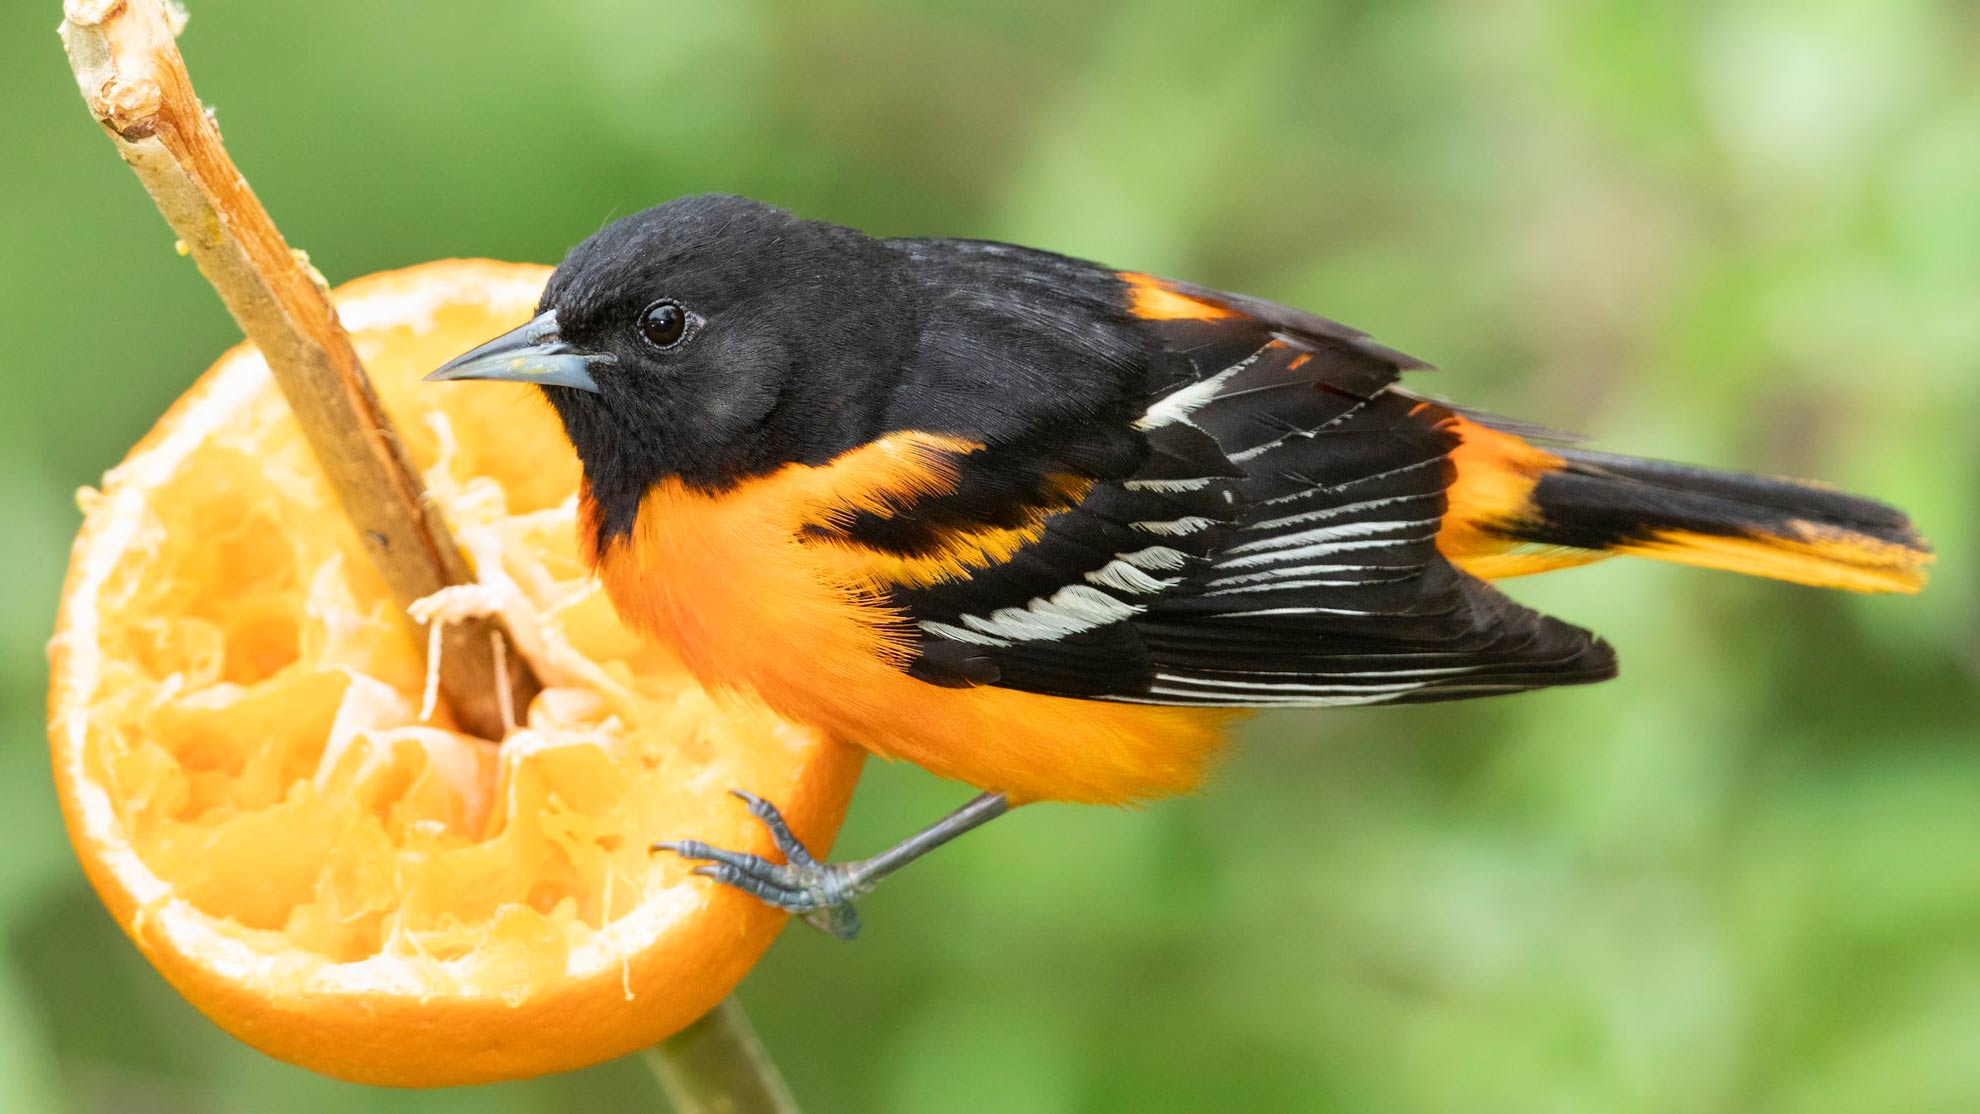 Baltimore Oriole feeding from a cut orange